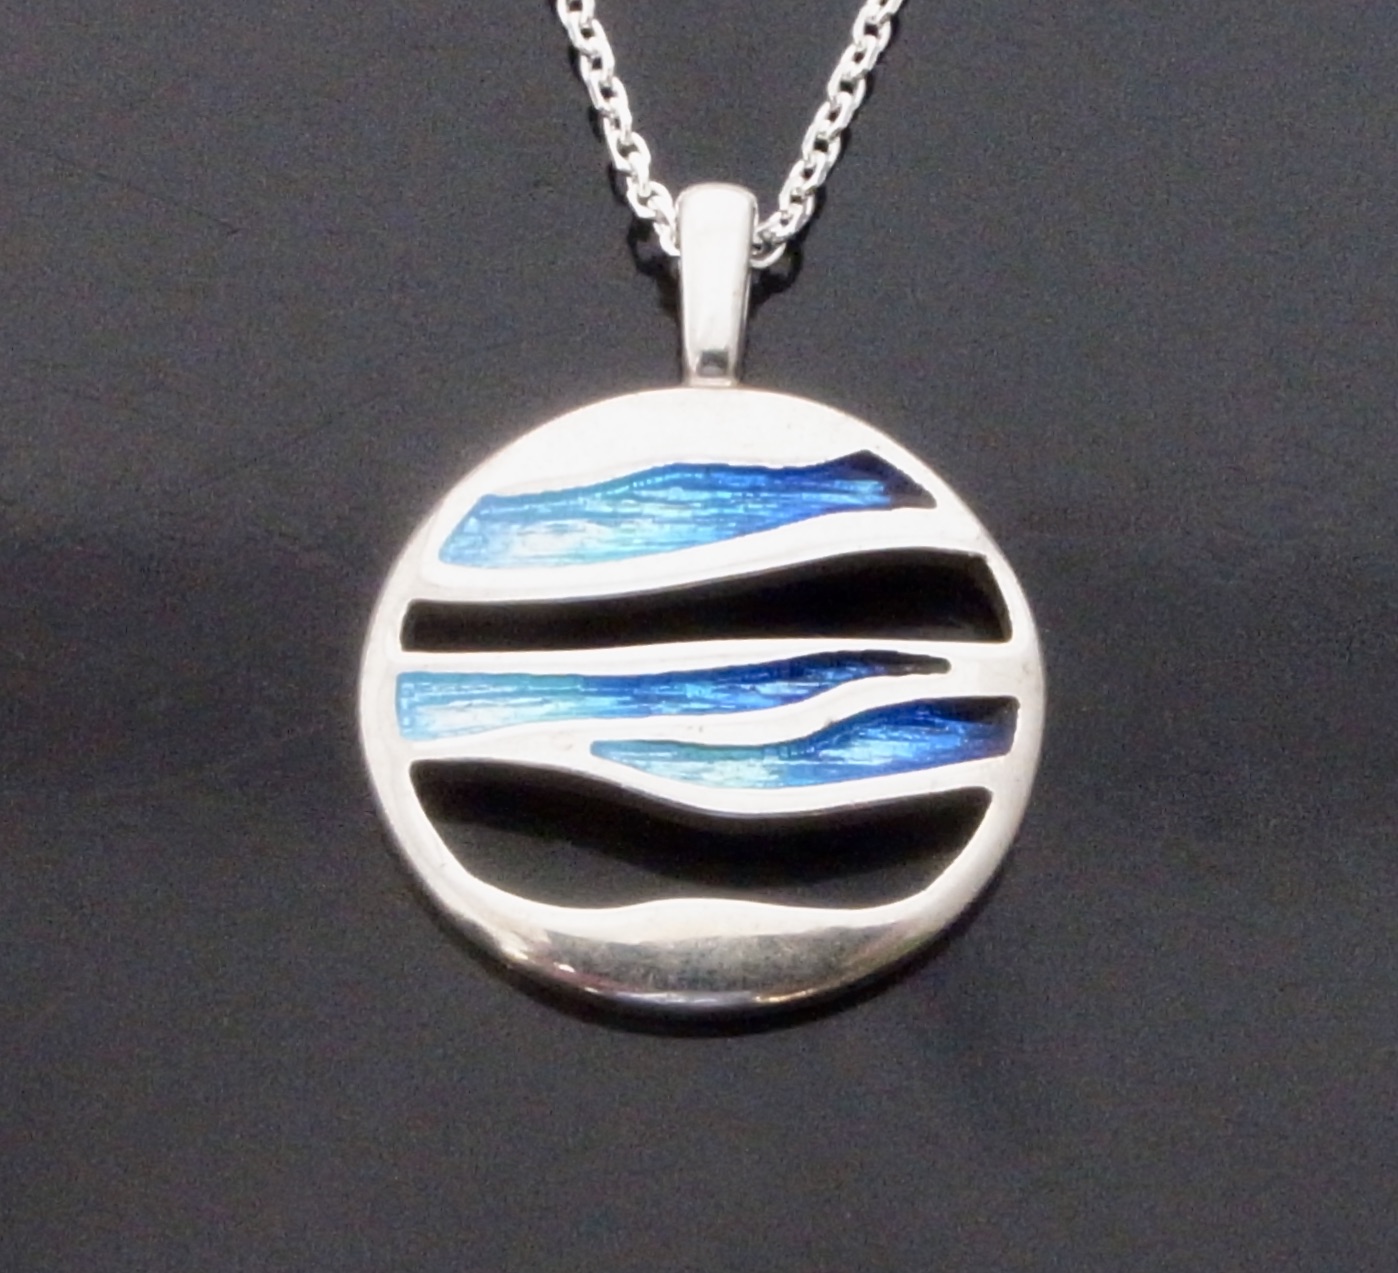 Ortak, silver and enamel ‘Orbit’ pendant on chain, Orkney, Scotland ...